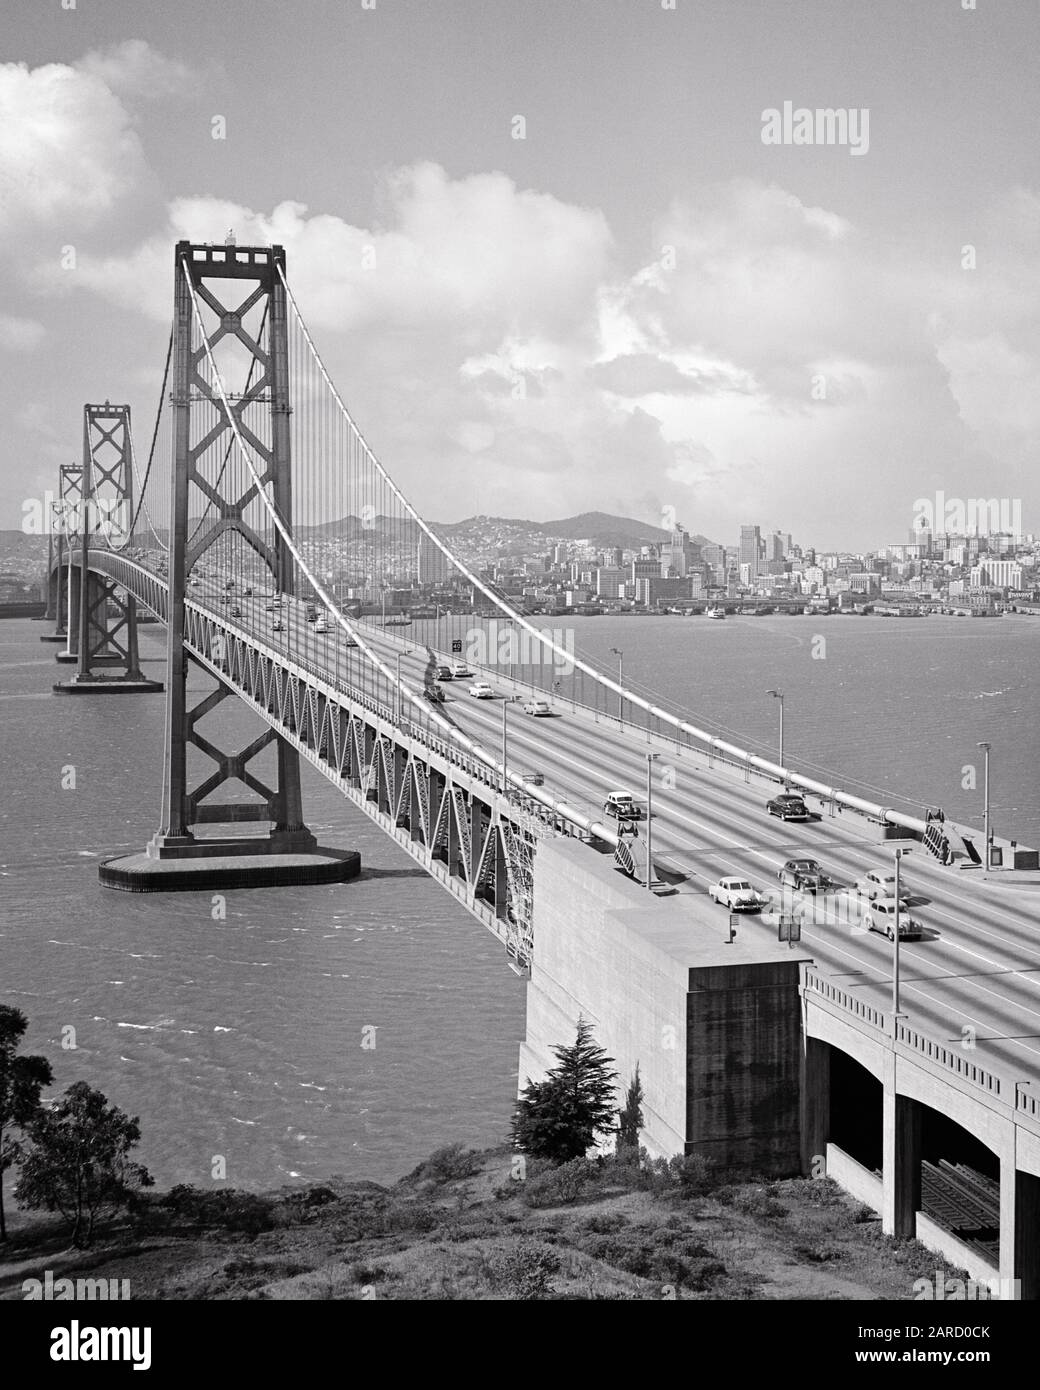 1950s WESTERN SPAN OF THE OAKLAND BAY BRIDGE SAN FRANCISCO CA - b8596 FST001 HARS SAN FRANCISCO SPAN BLACK AND WHITE OLD FASHIONED SUSPENSION BRIDGE Stock Photo